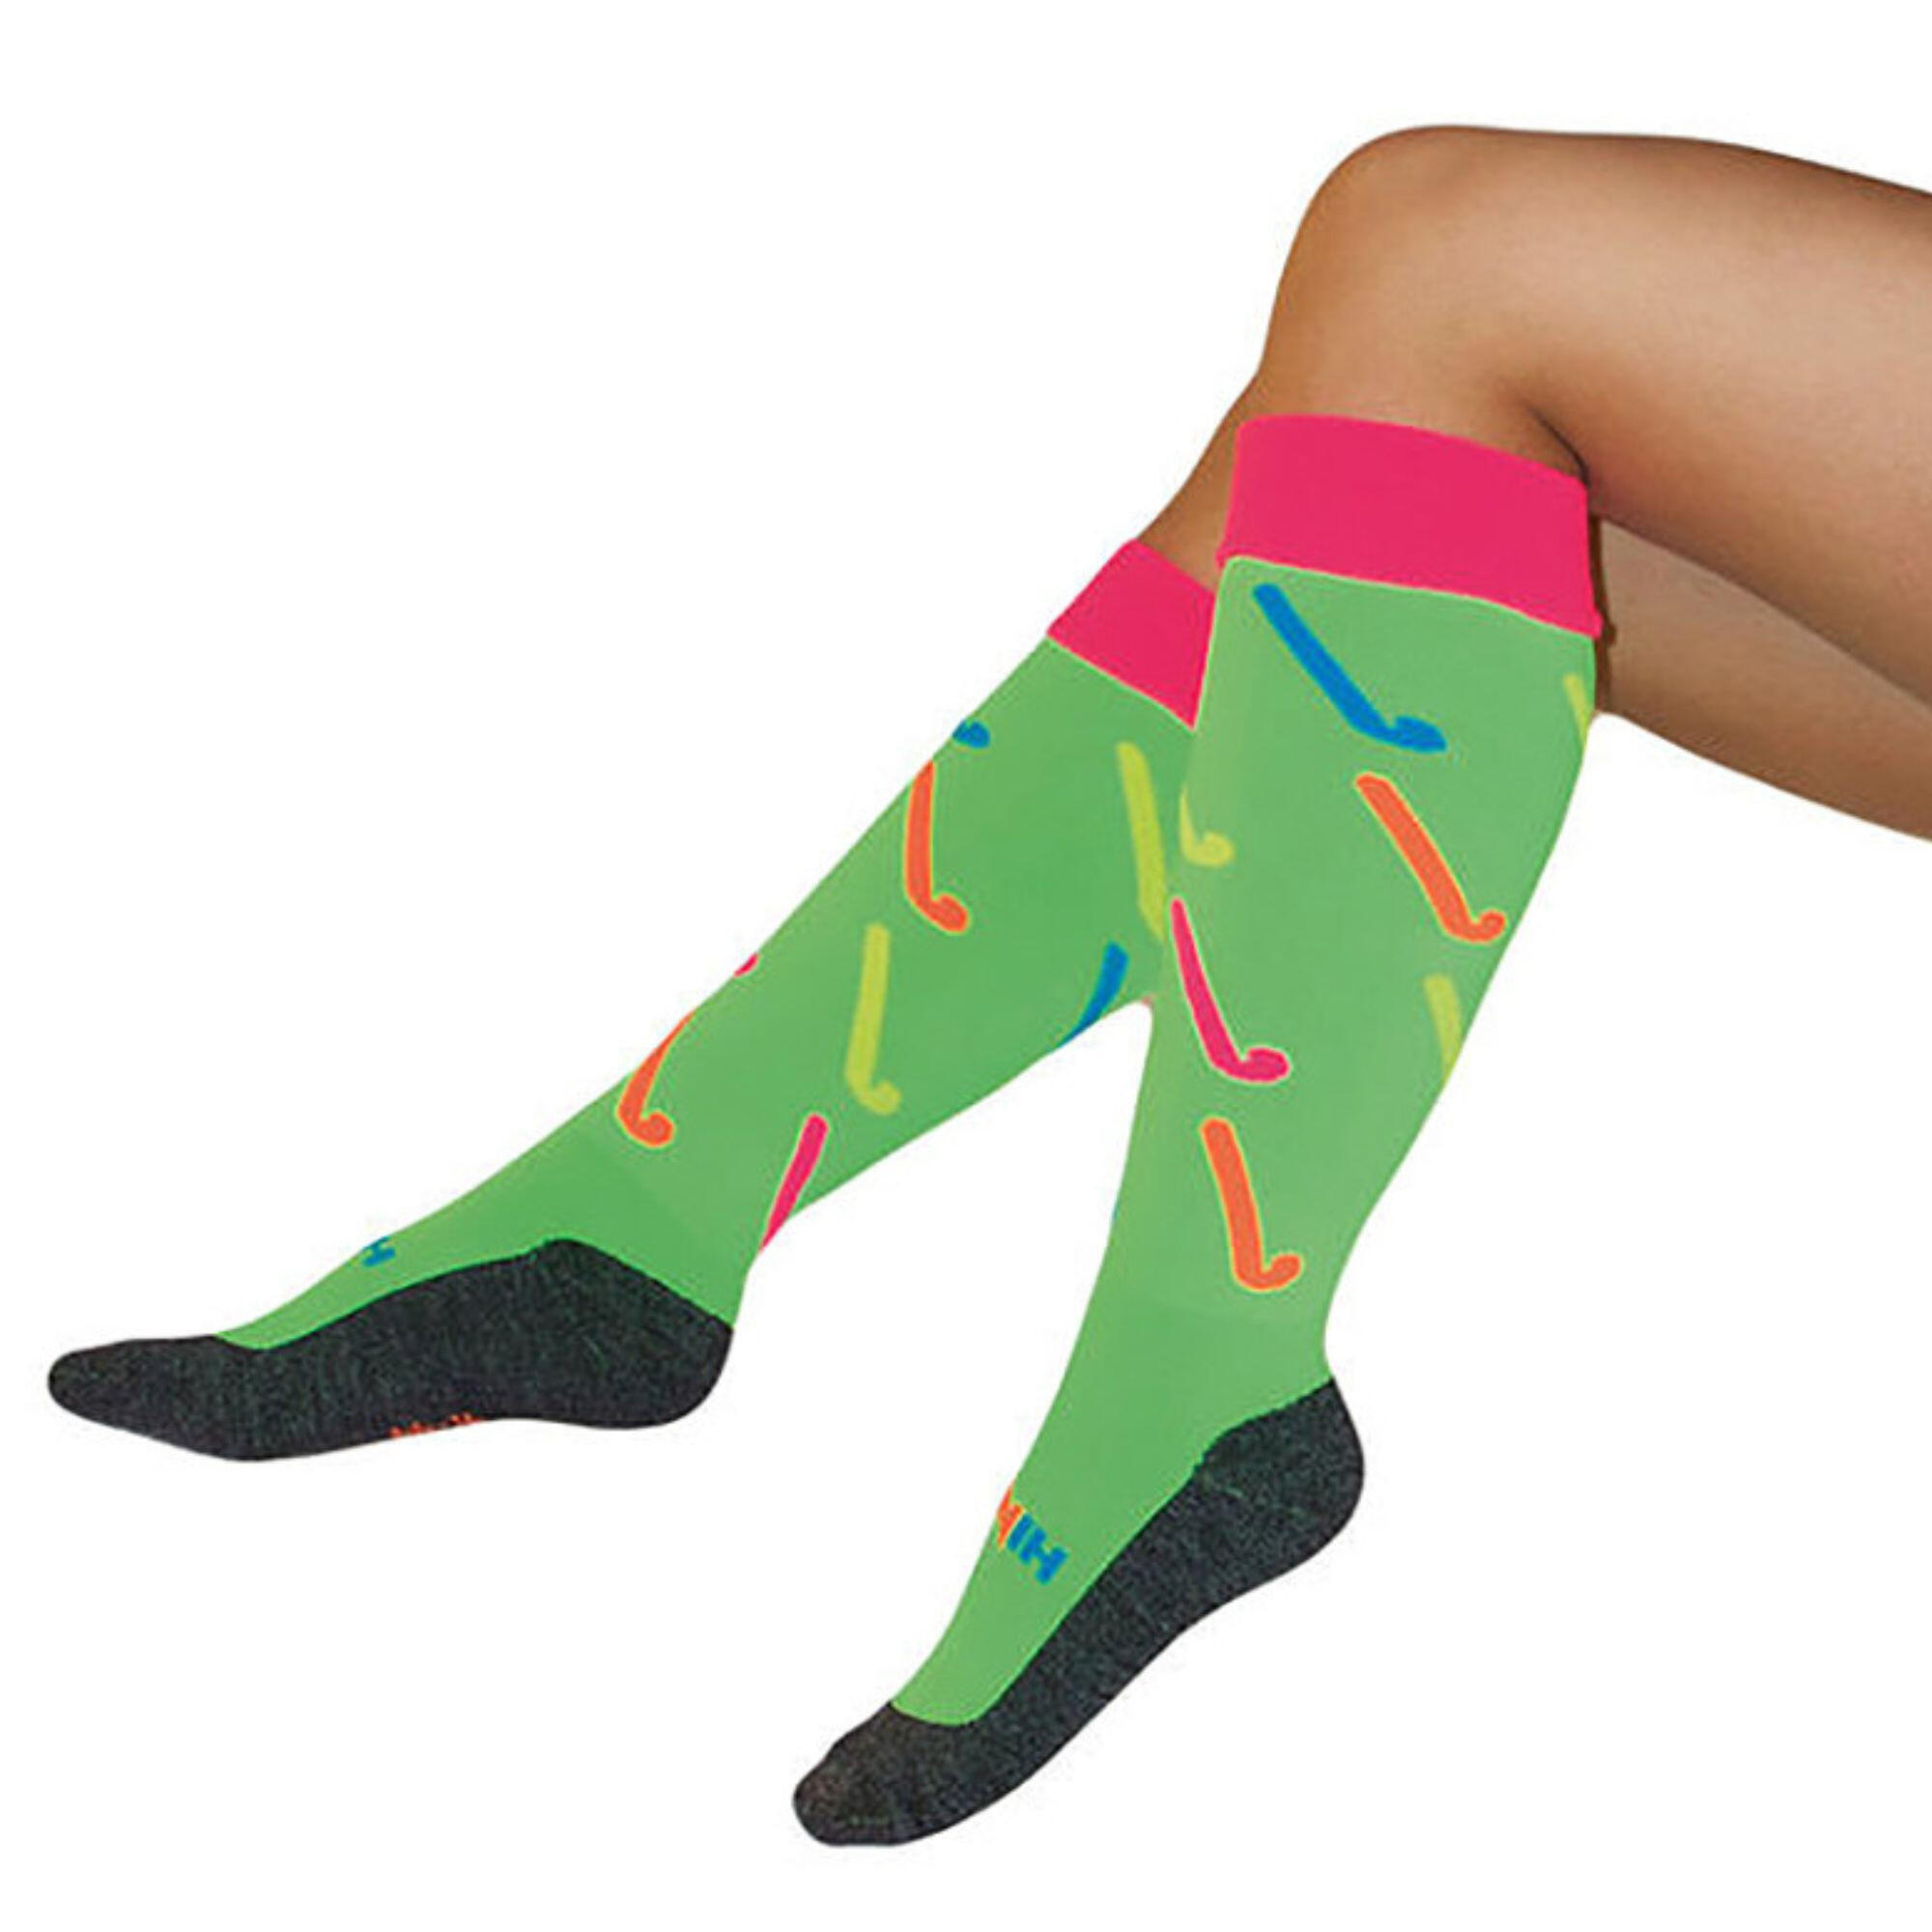 Knee High Hockey Socks with Hockey Stick Designs | Adult Sizes 3/4